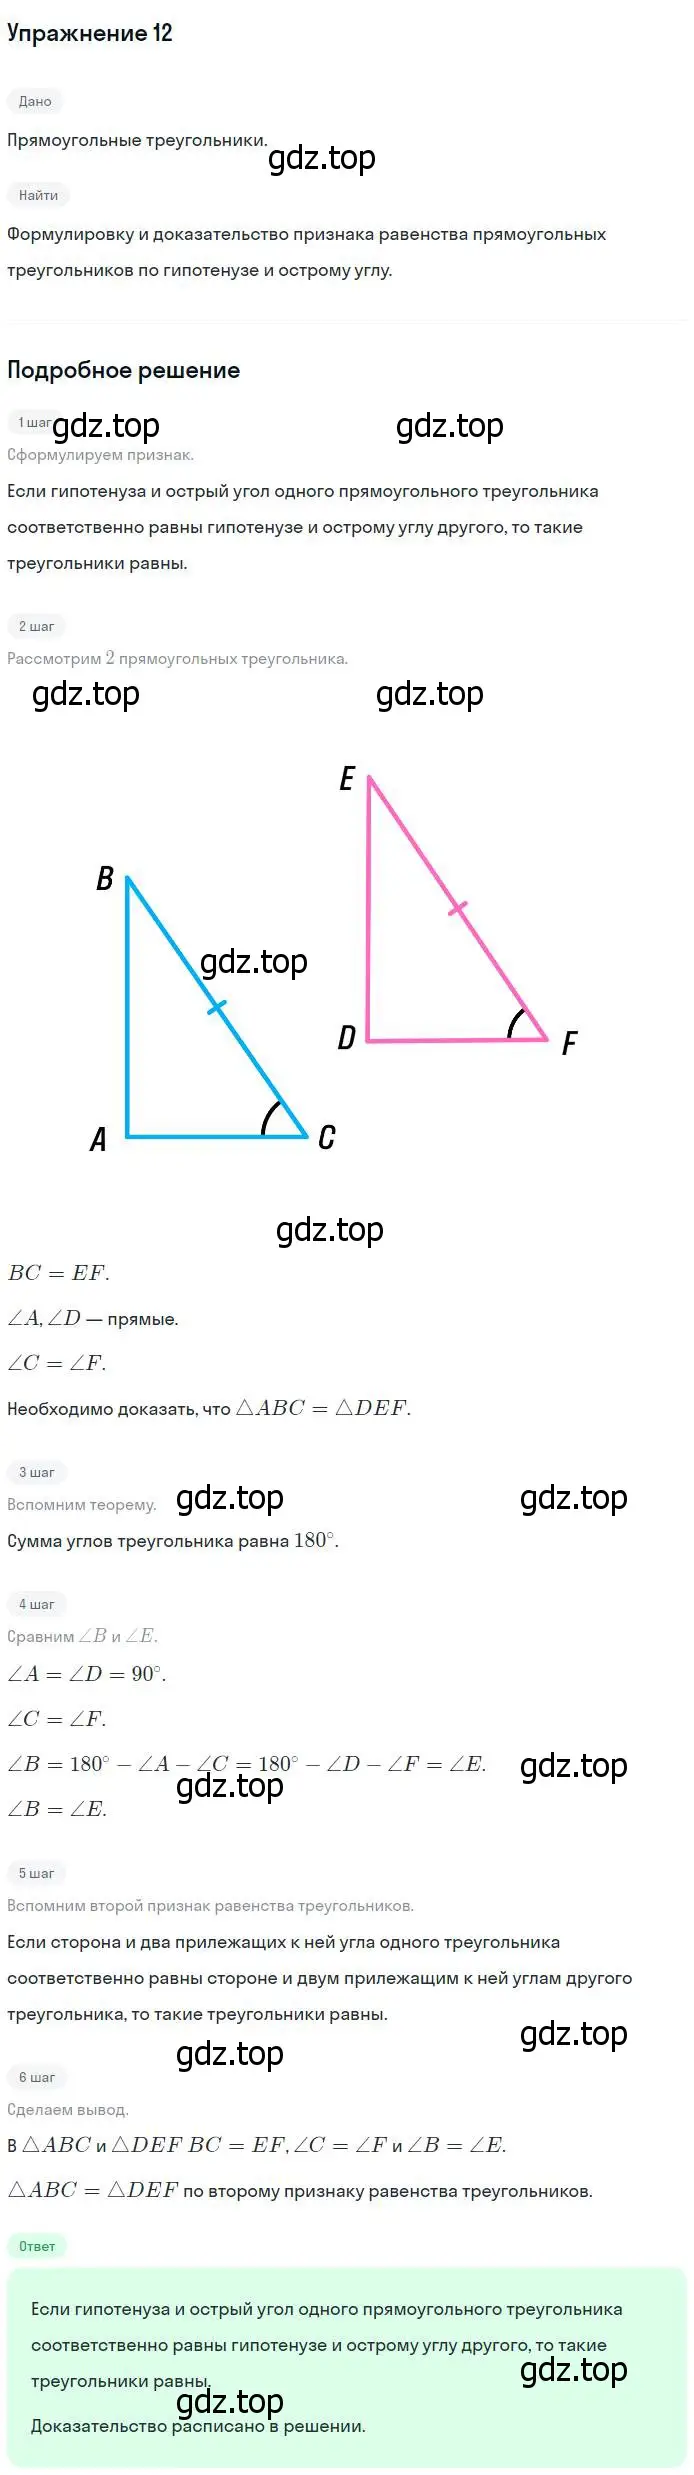 Решение номер 12 (страница 88) гдз по геометрии 7-9 класс Атанасян, Бутузов, учебник